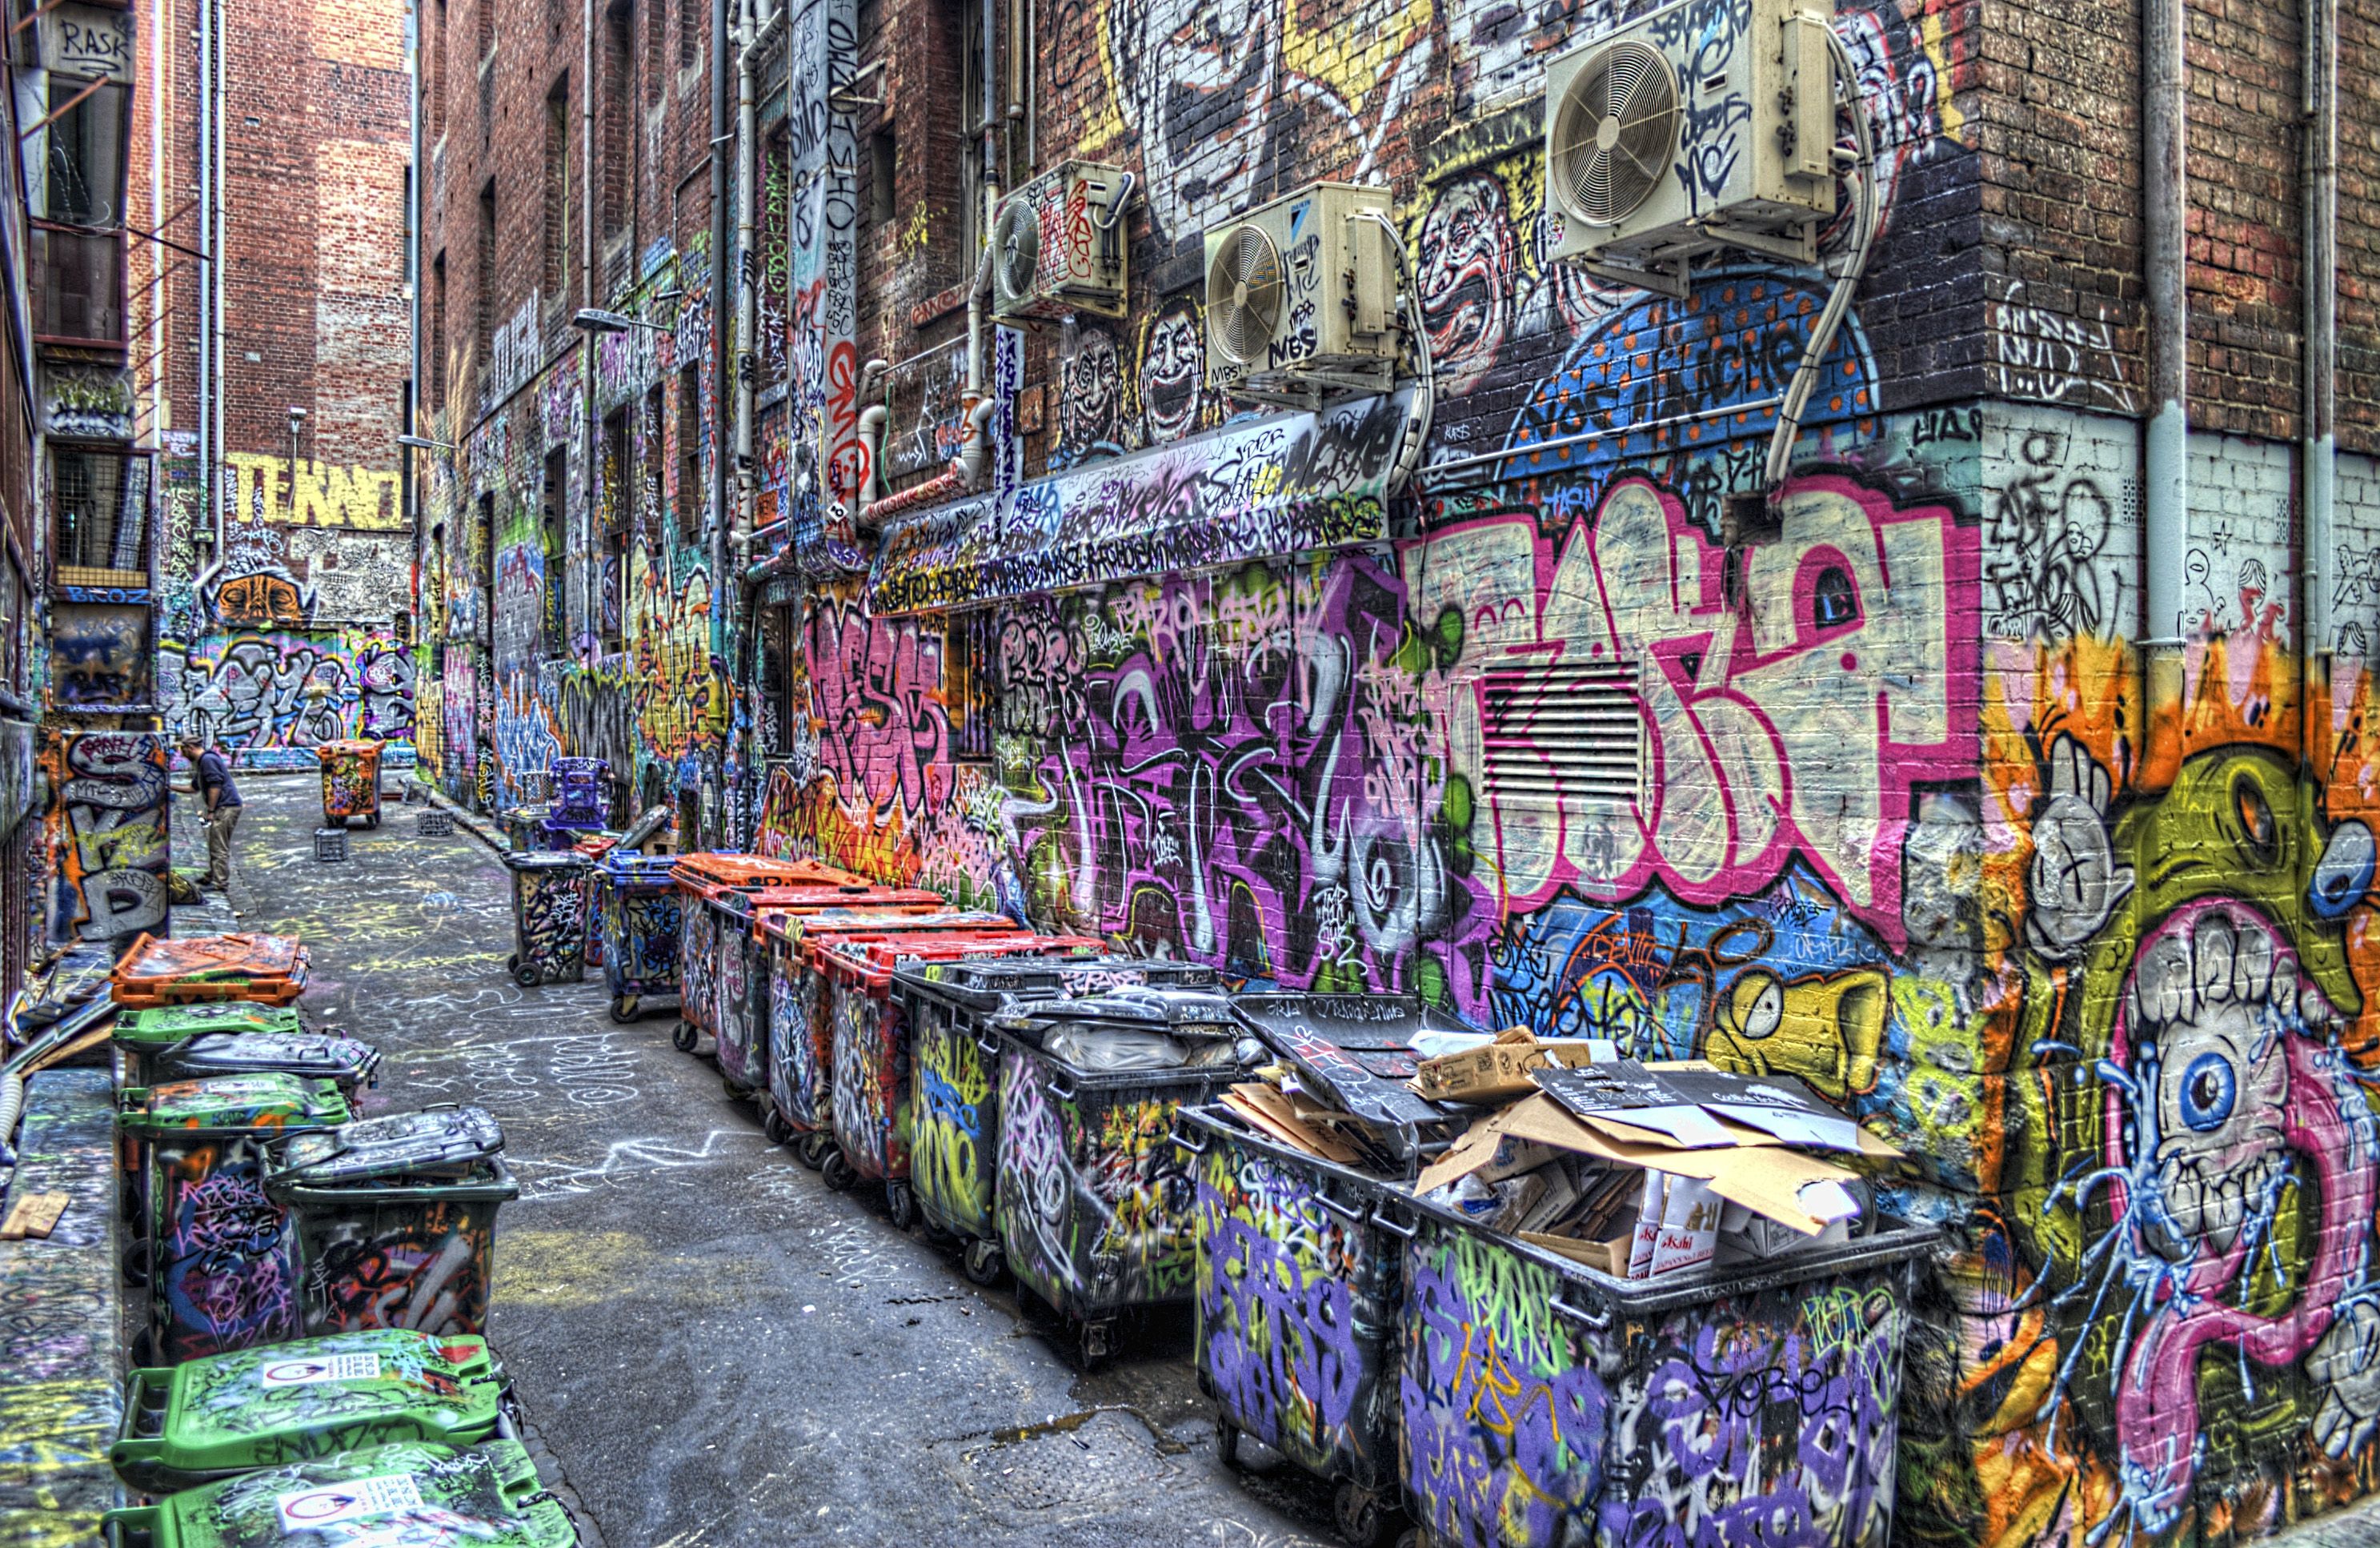 Graffiti City Wallpaper HD download free